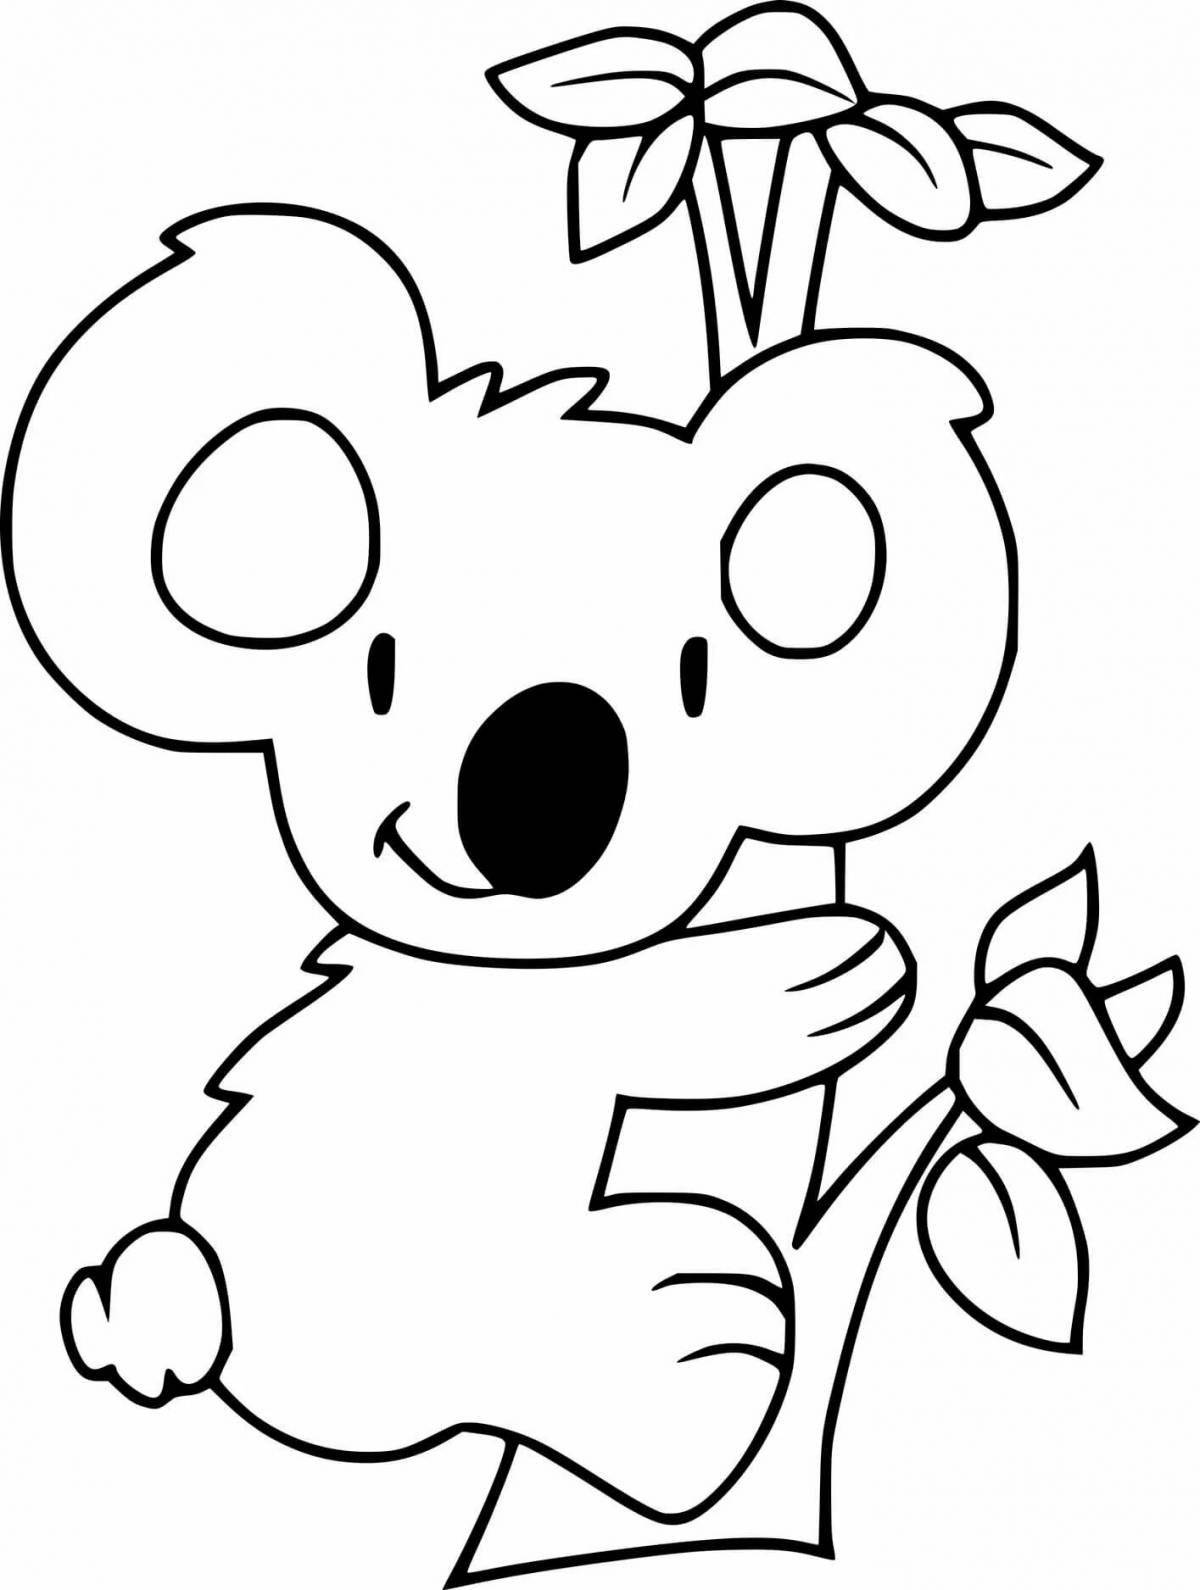 Coloring page joyful kuala